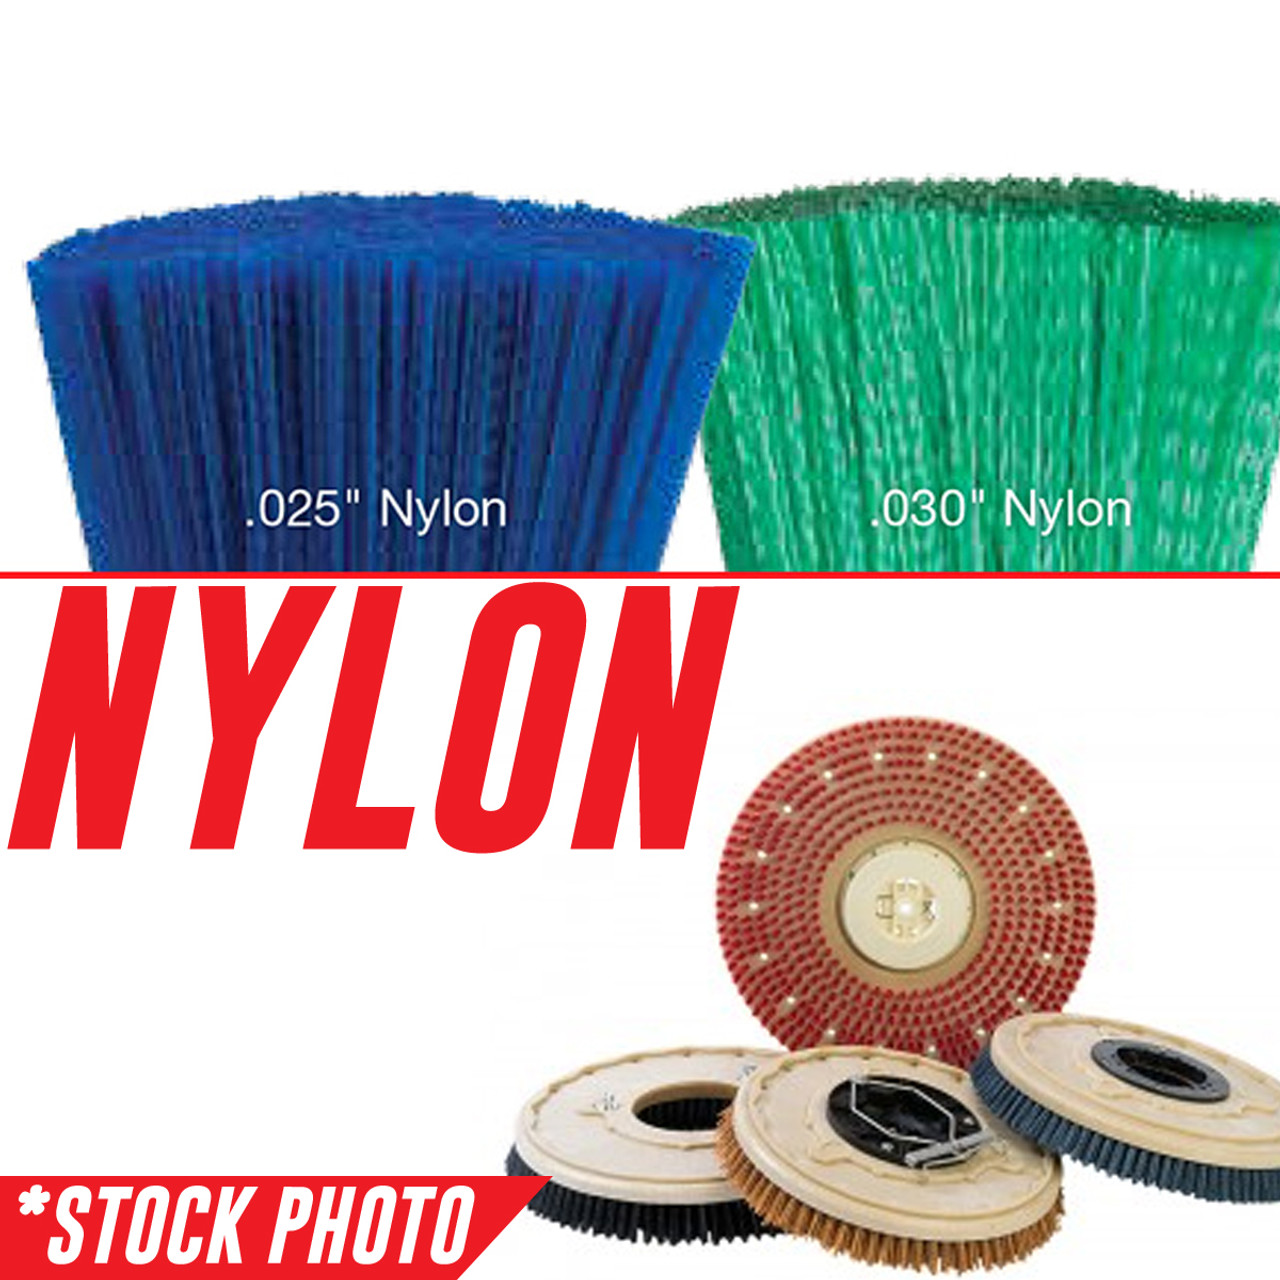 1018377, 1220184, 1220226, 385925: 12" Rotary Brush .028 Nylon fits Tennant Models 5400 26", T7 26"